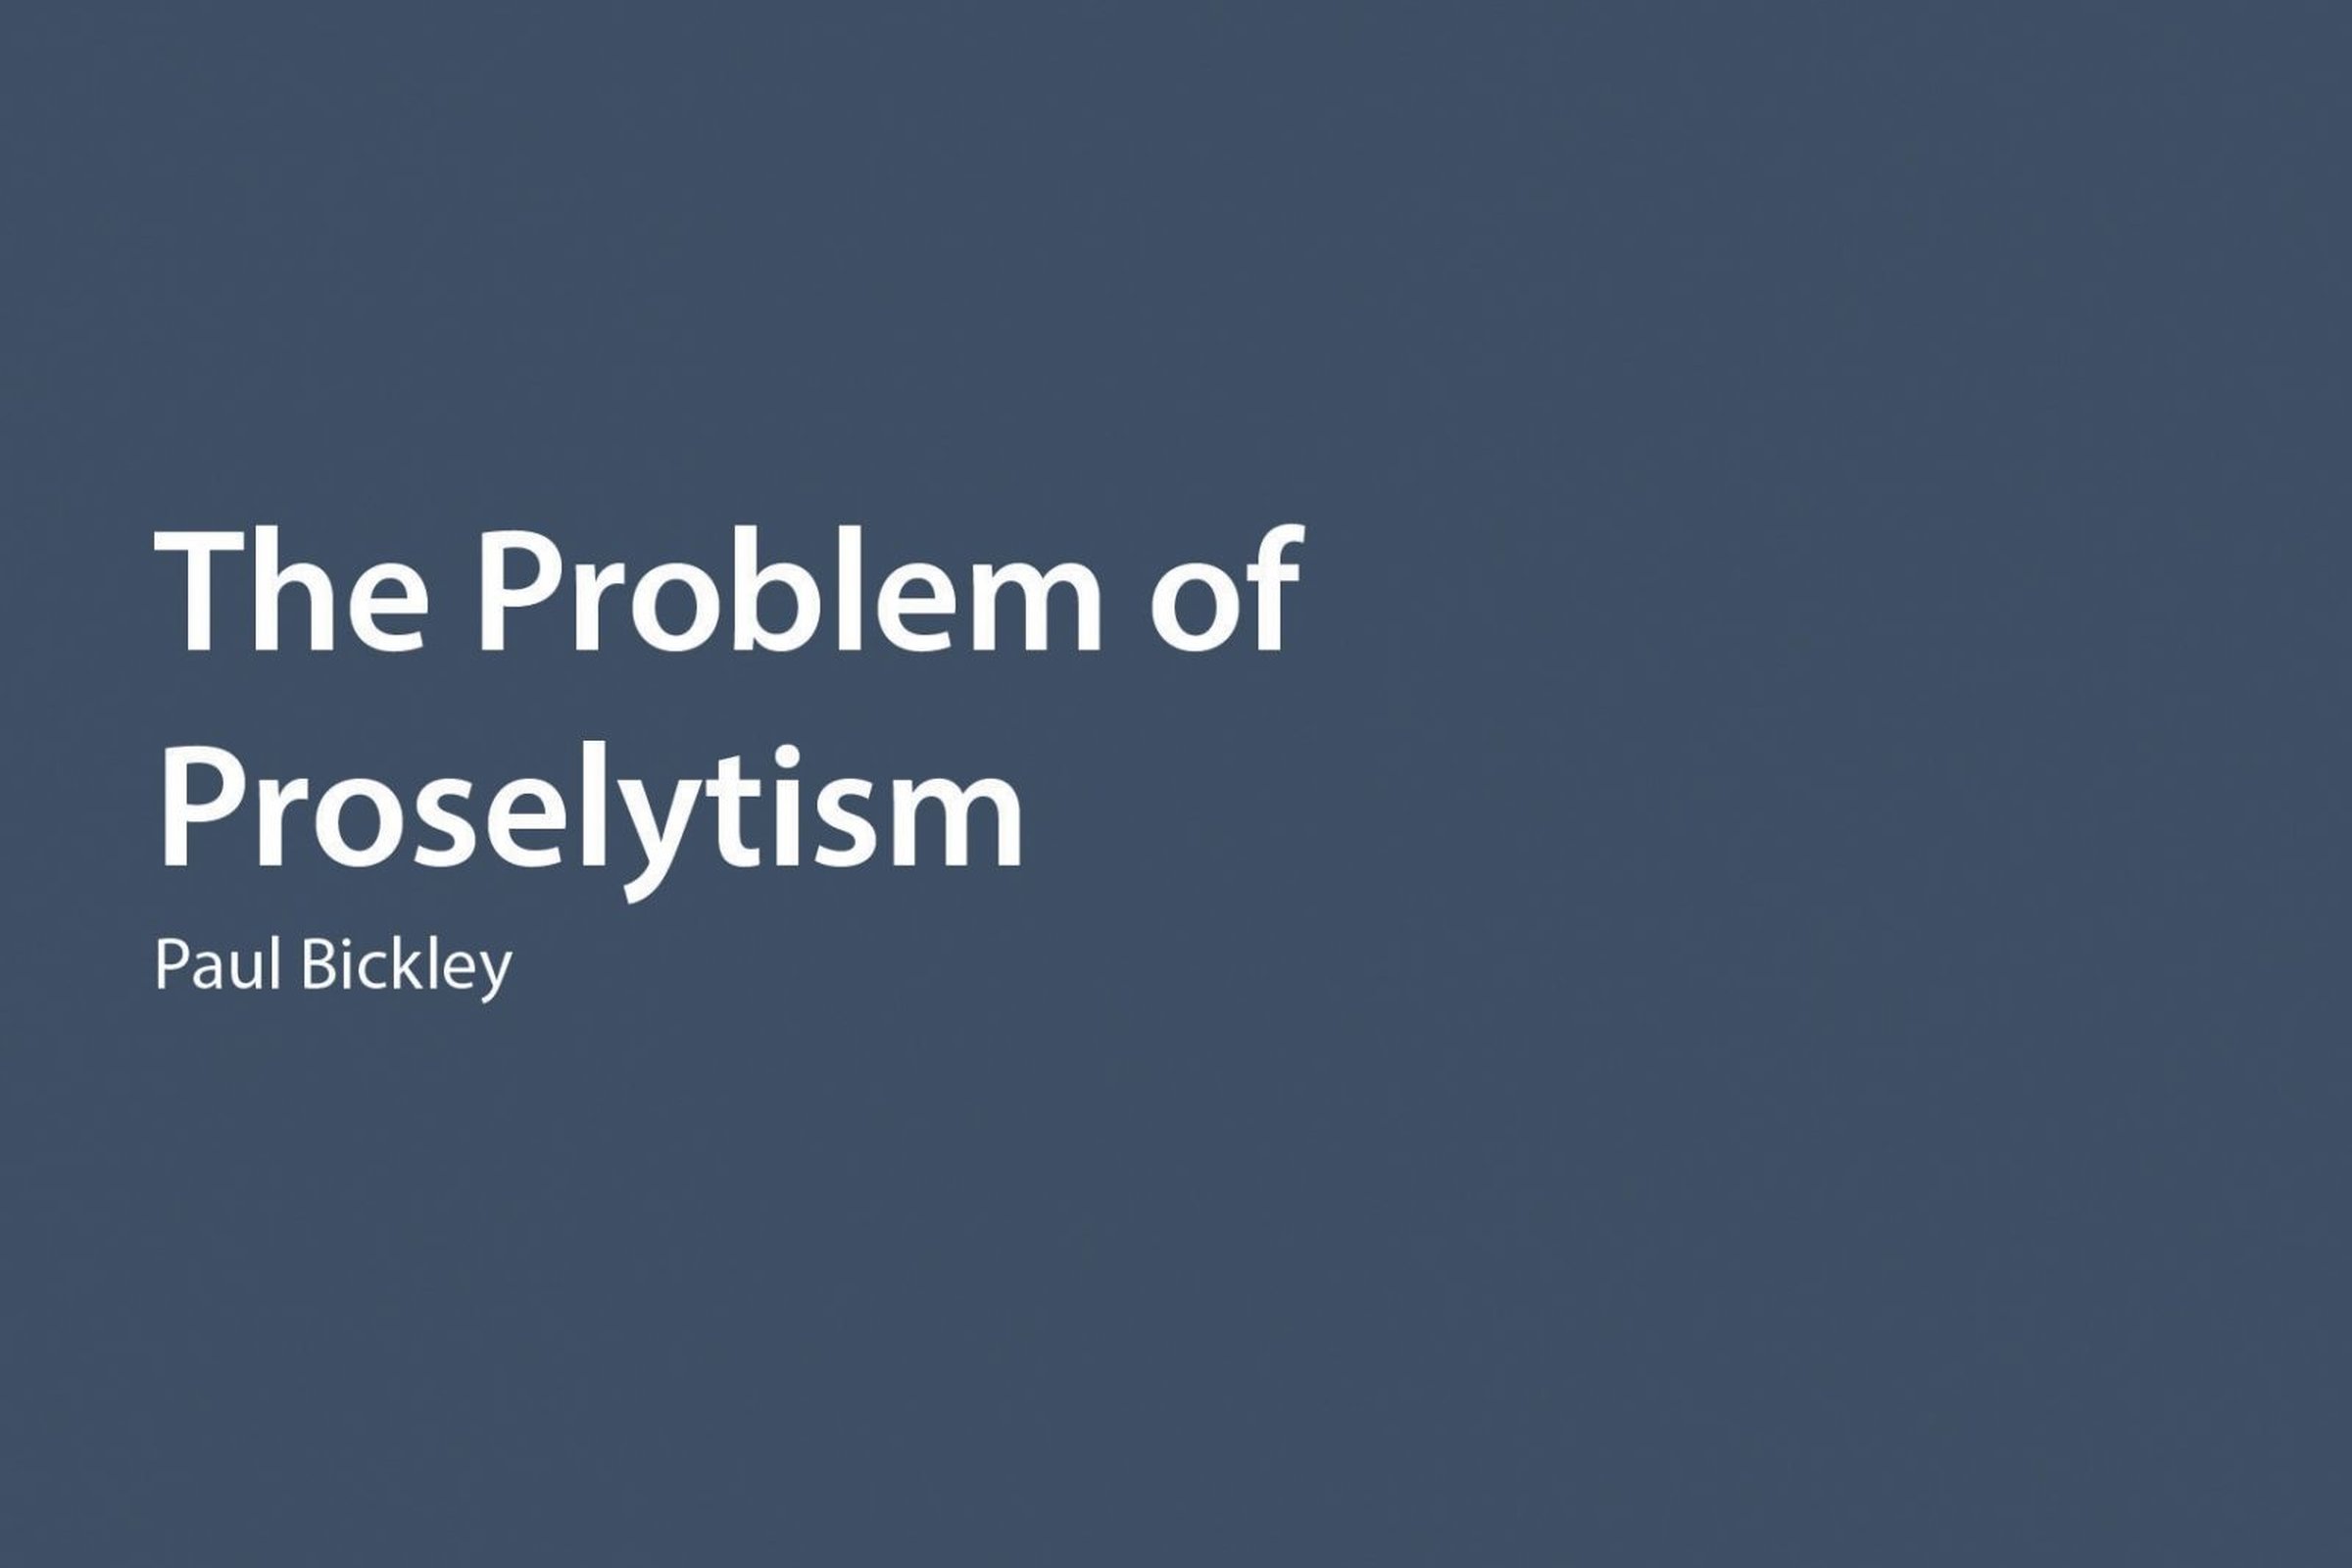 Paul Bickley on Proselytism - BBC Radio